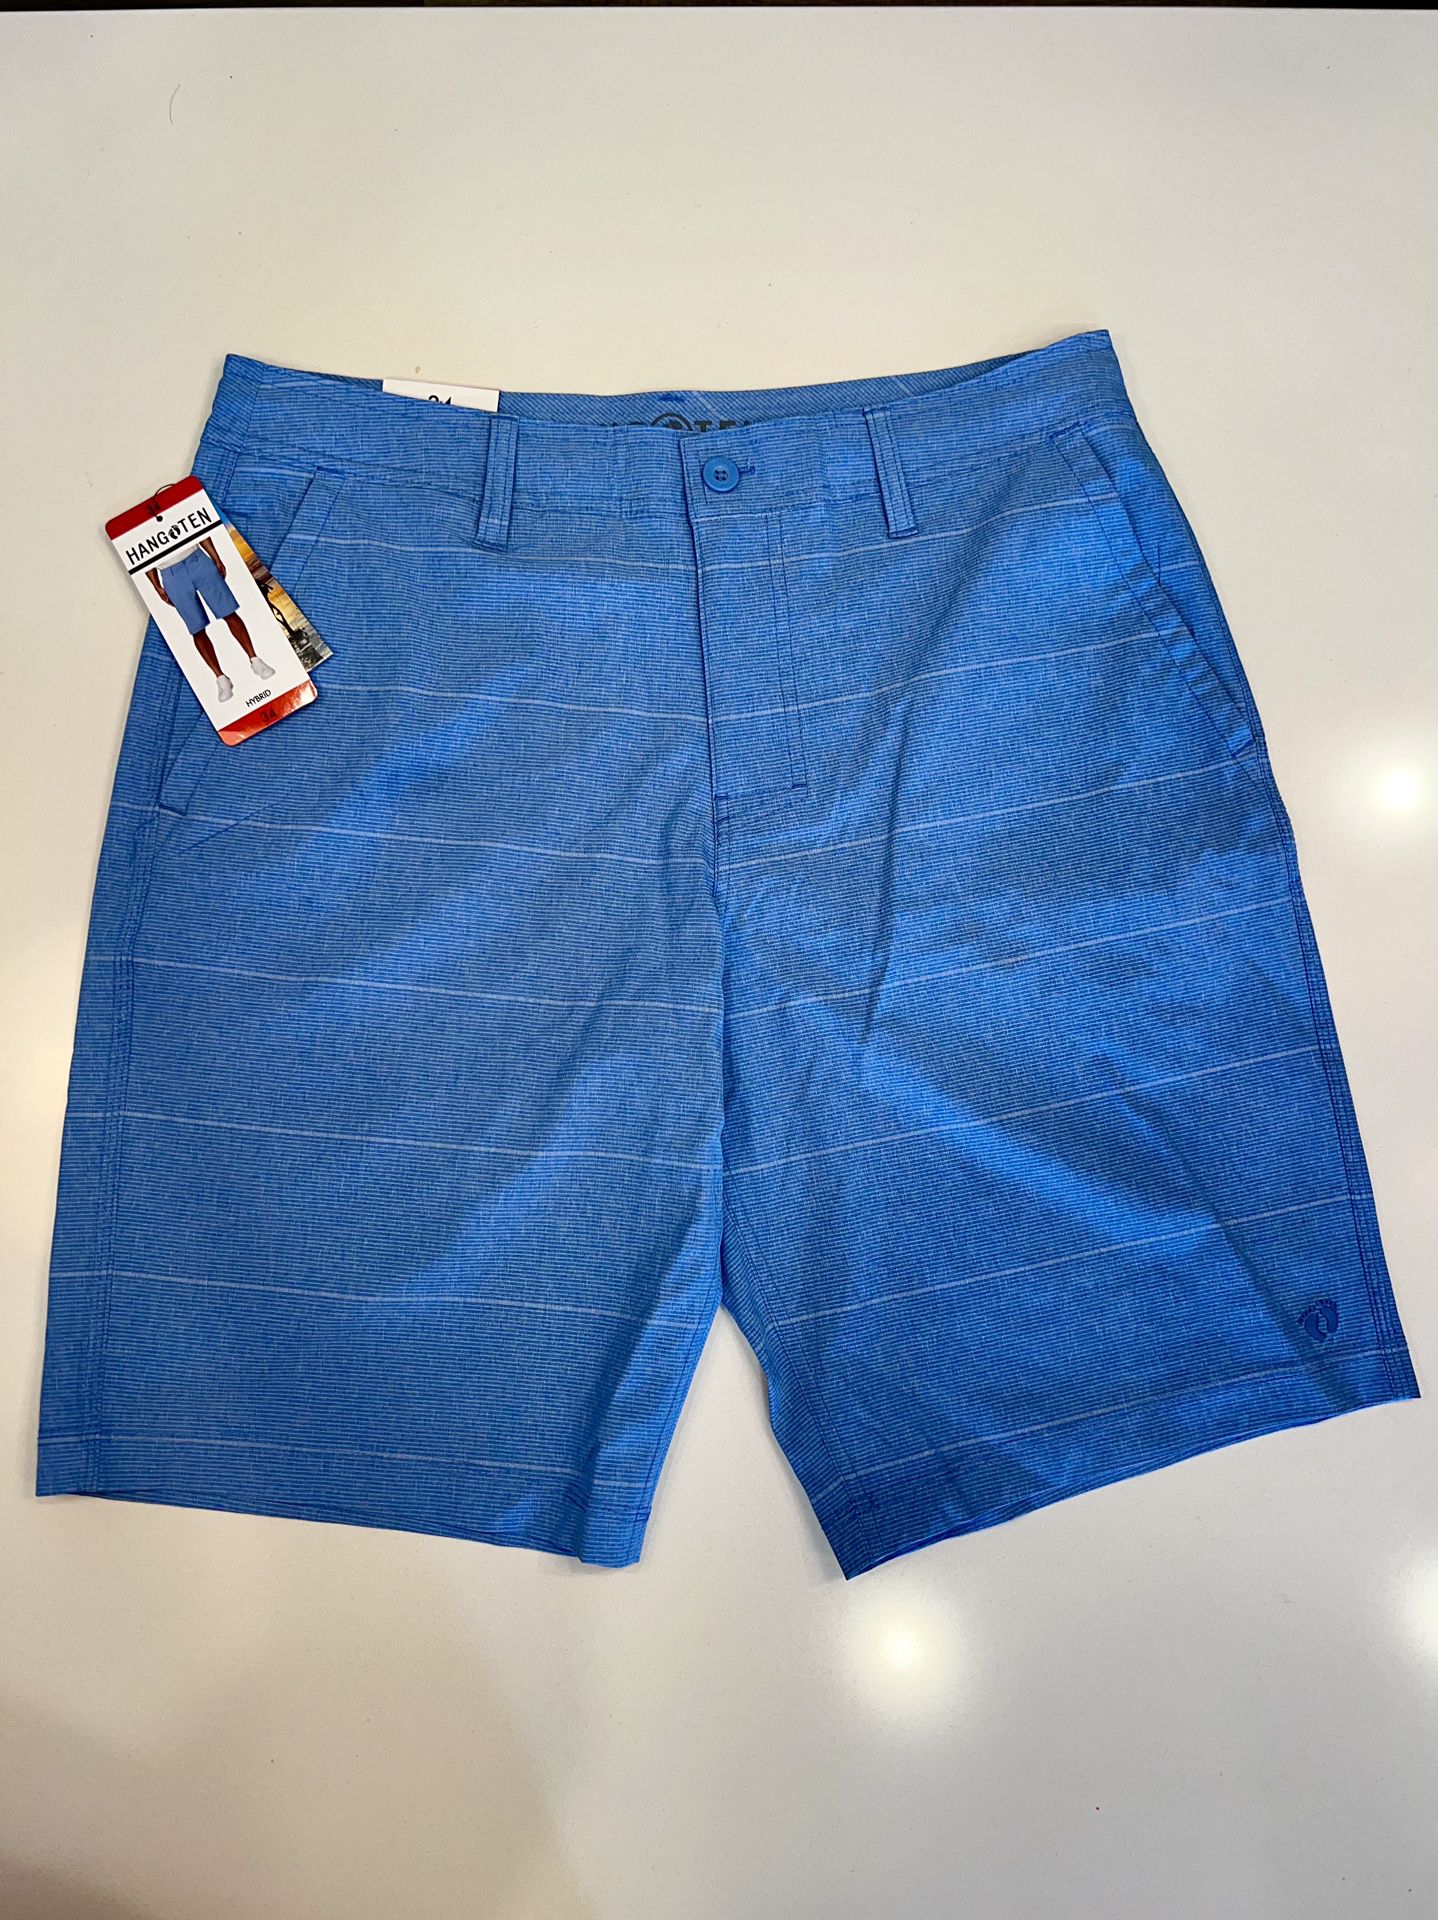 Hang Ten Hybrid Shorts, Blue Sapphire, Men's 34, NWT